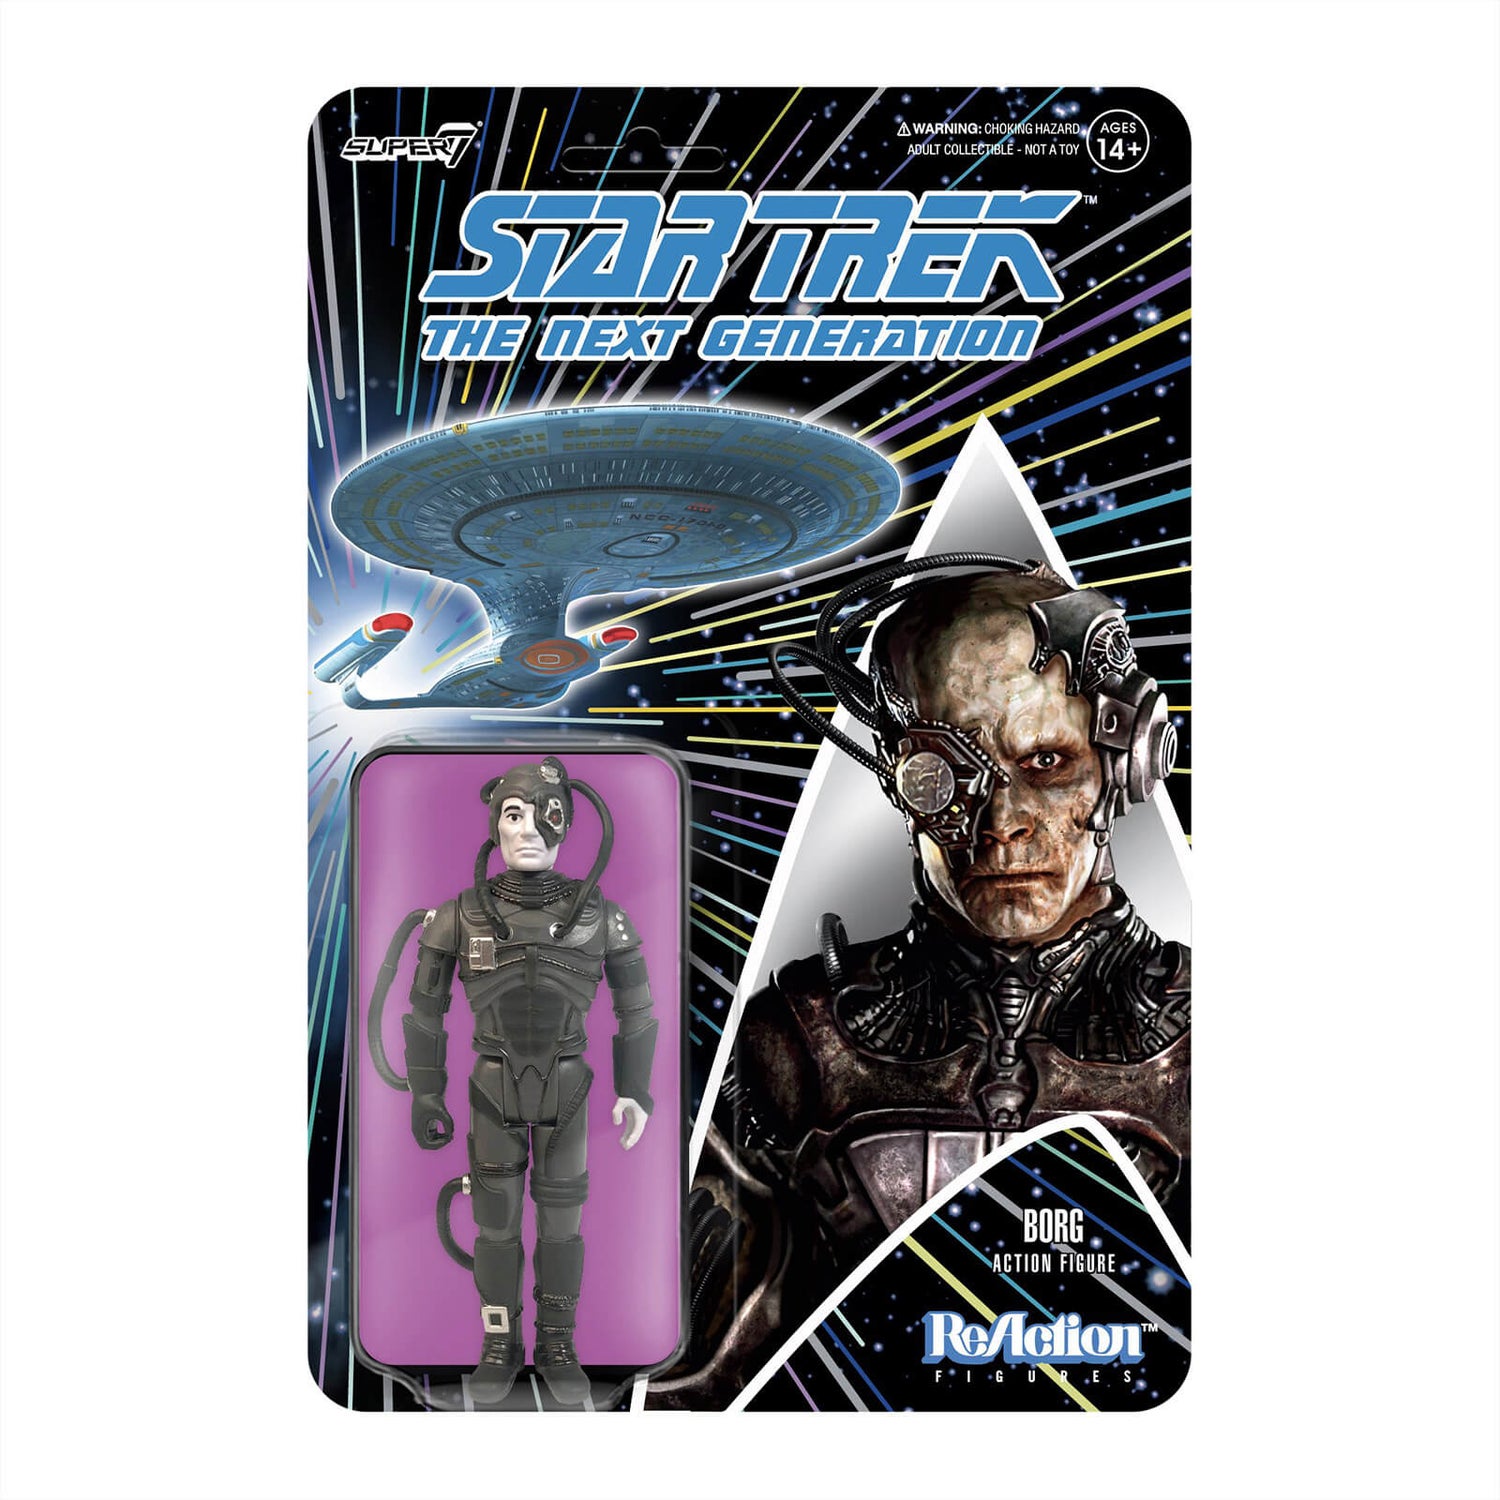 Super7 Star Trek The Next Generation ReAction Figure - Borg